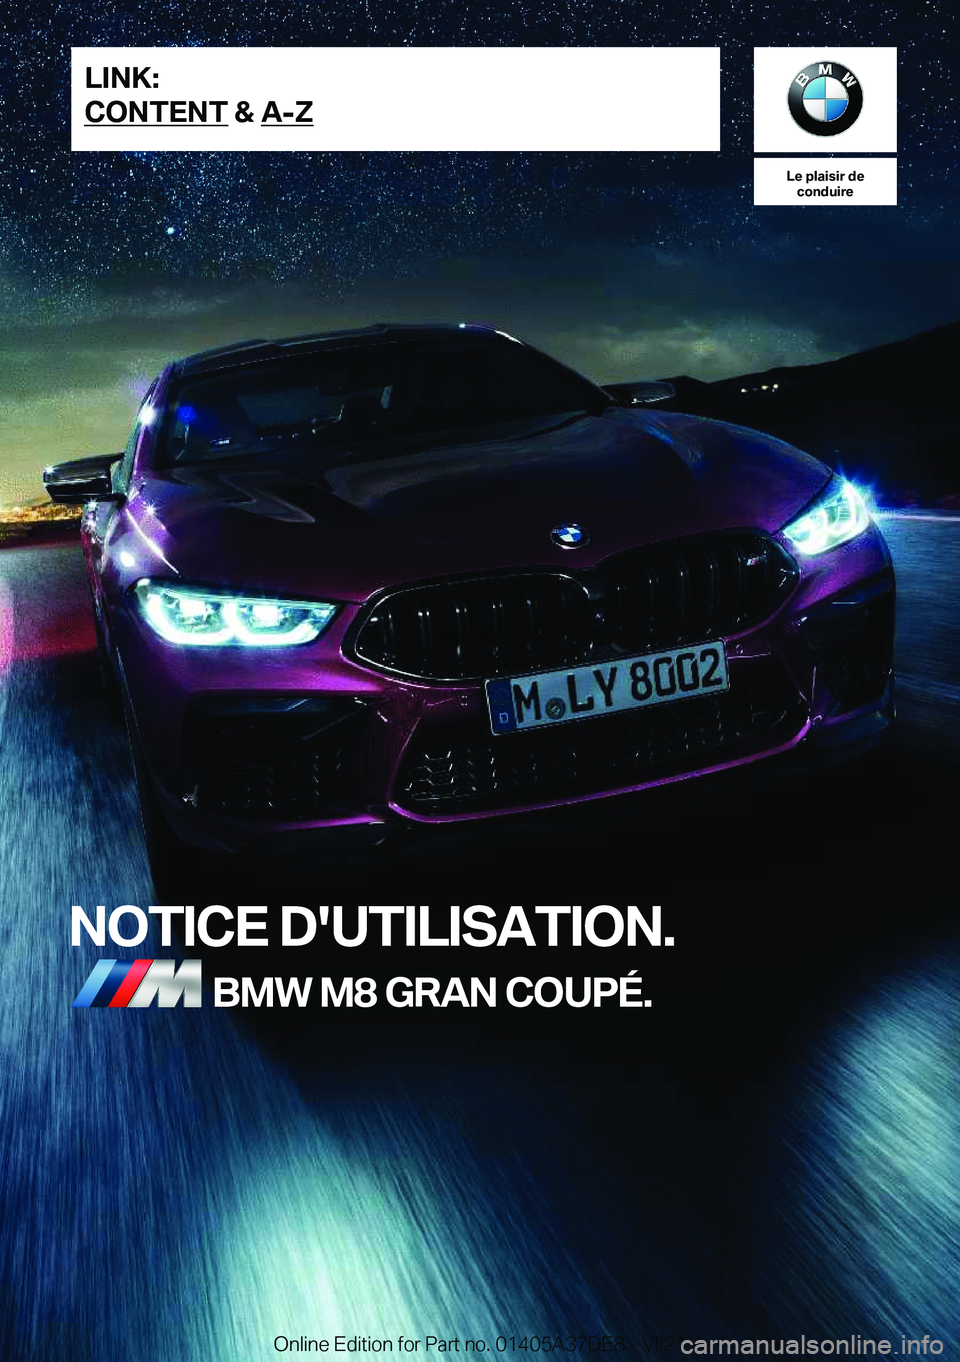 BMW M8 GRAN COUPE 2022  Notices Demploi (in French) �L�e��p�l�a�i�s�i�r��d�e�c�o�n�d�u�i�r�e
�N�O�T�I�C�E��D�'�U�T�I�L�I�S�A�T�I�O�N�.�B�M�W��M�8��G�R�A�N��C�O�U�P�